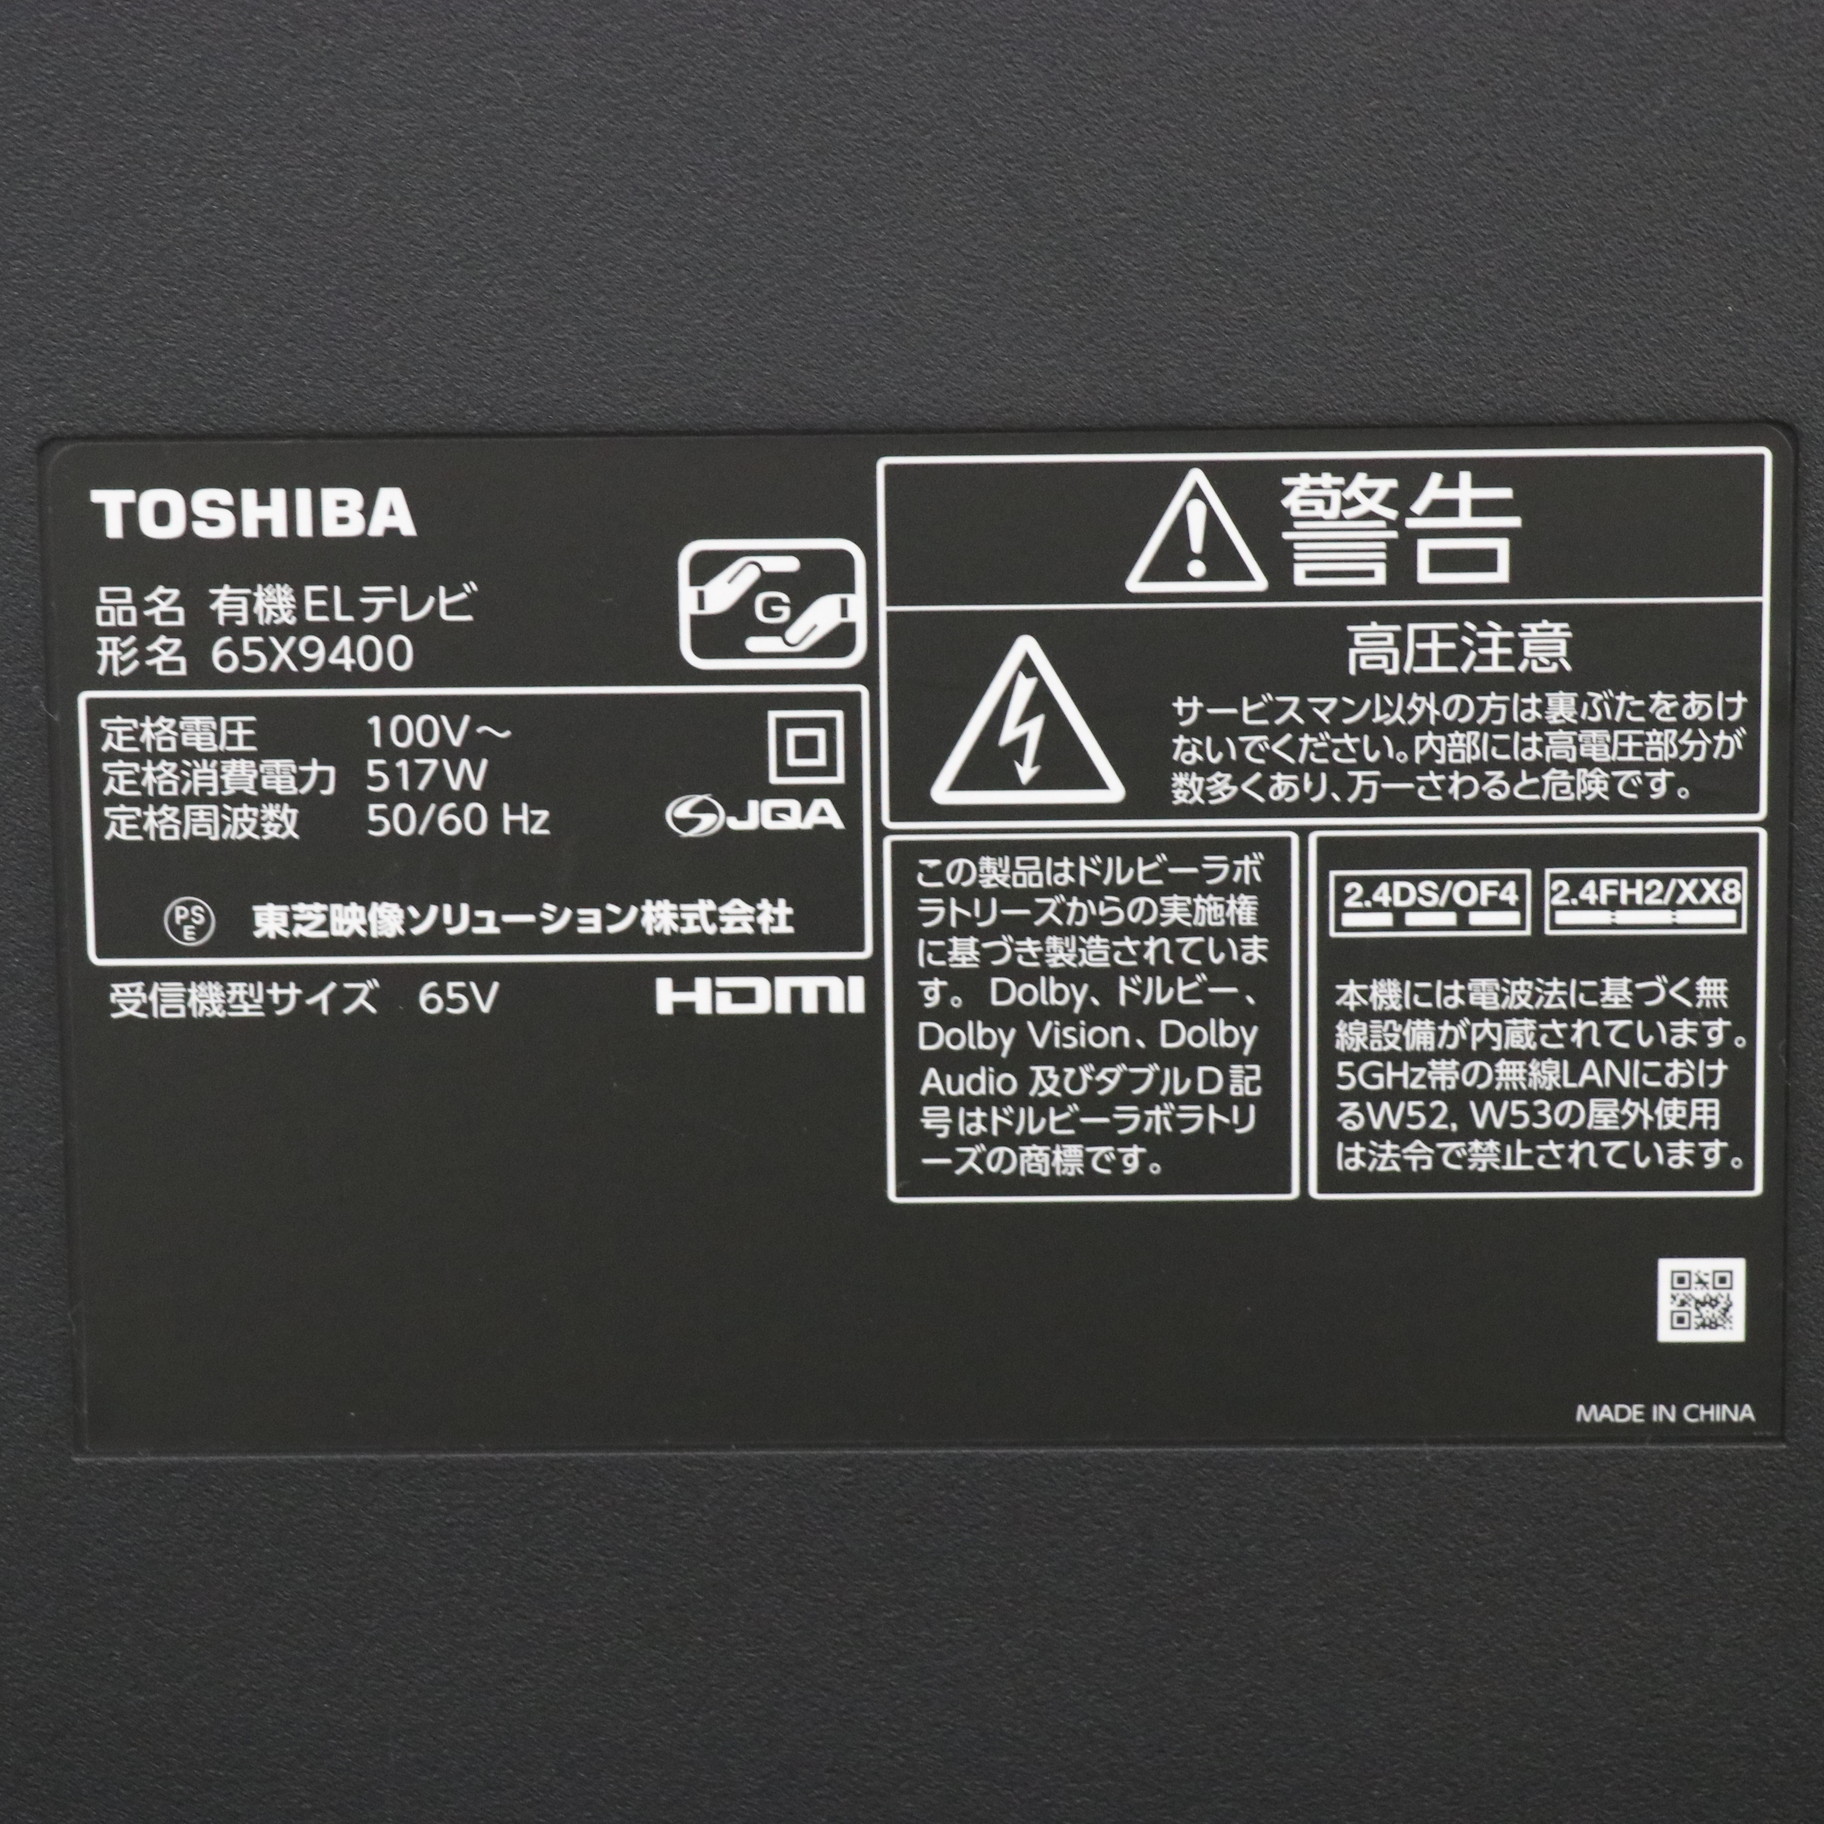 TOSHIBA 65X9400 BLACK